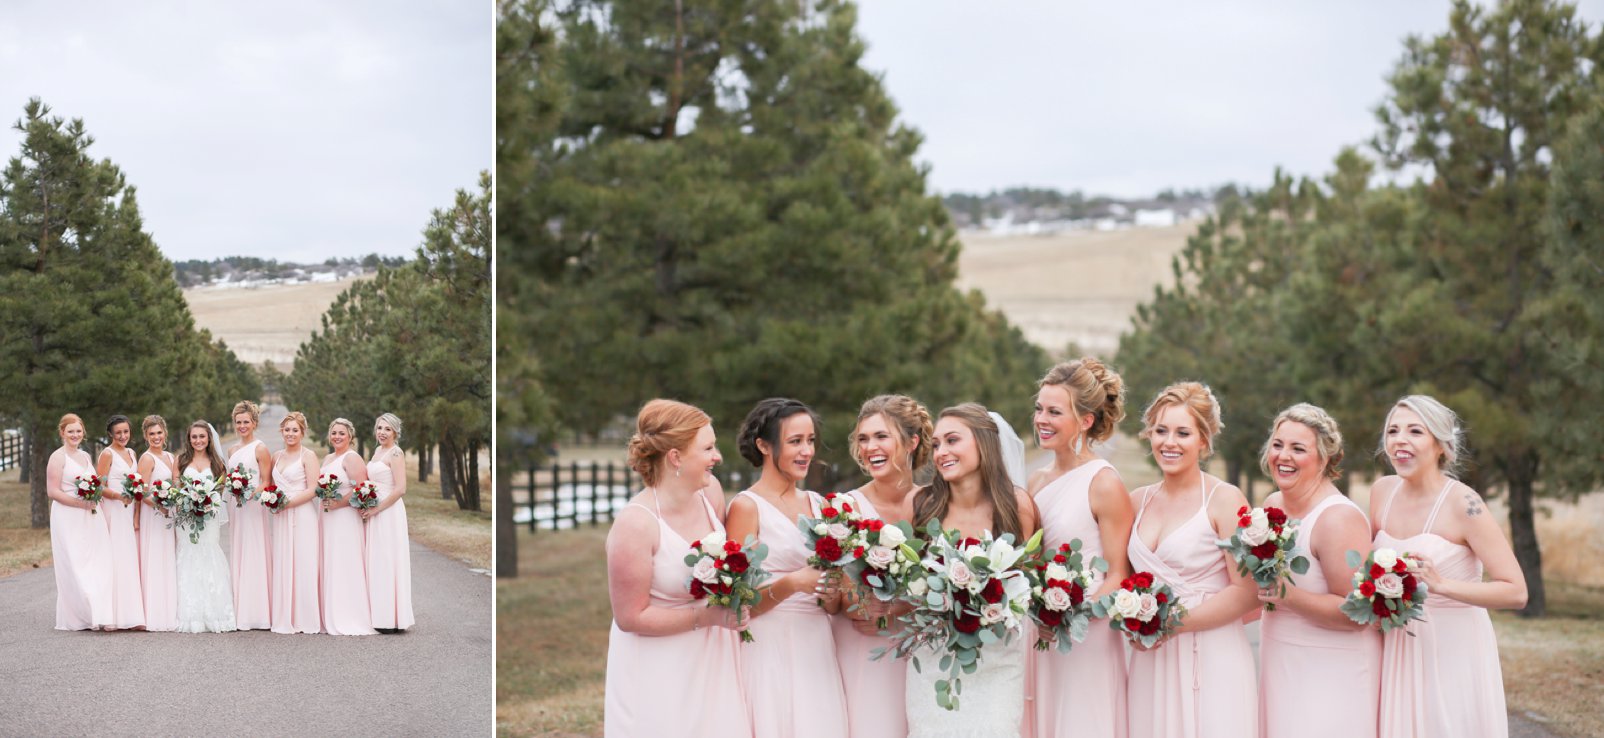 bridesmaids at spruce mountain ranch winter wedding